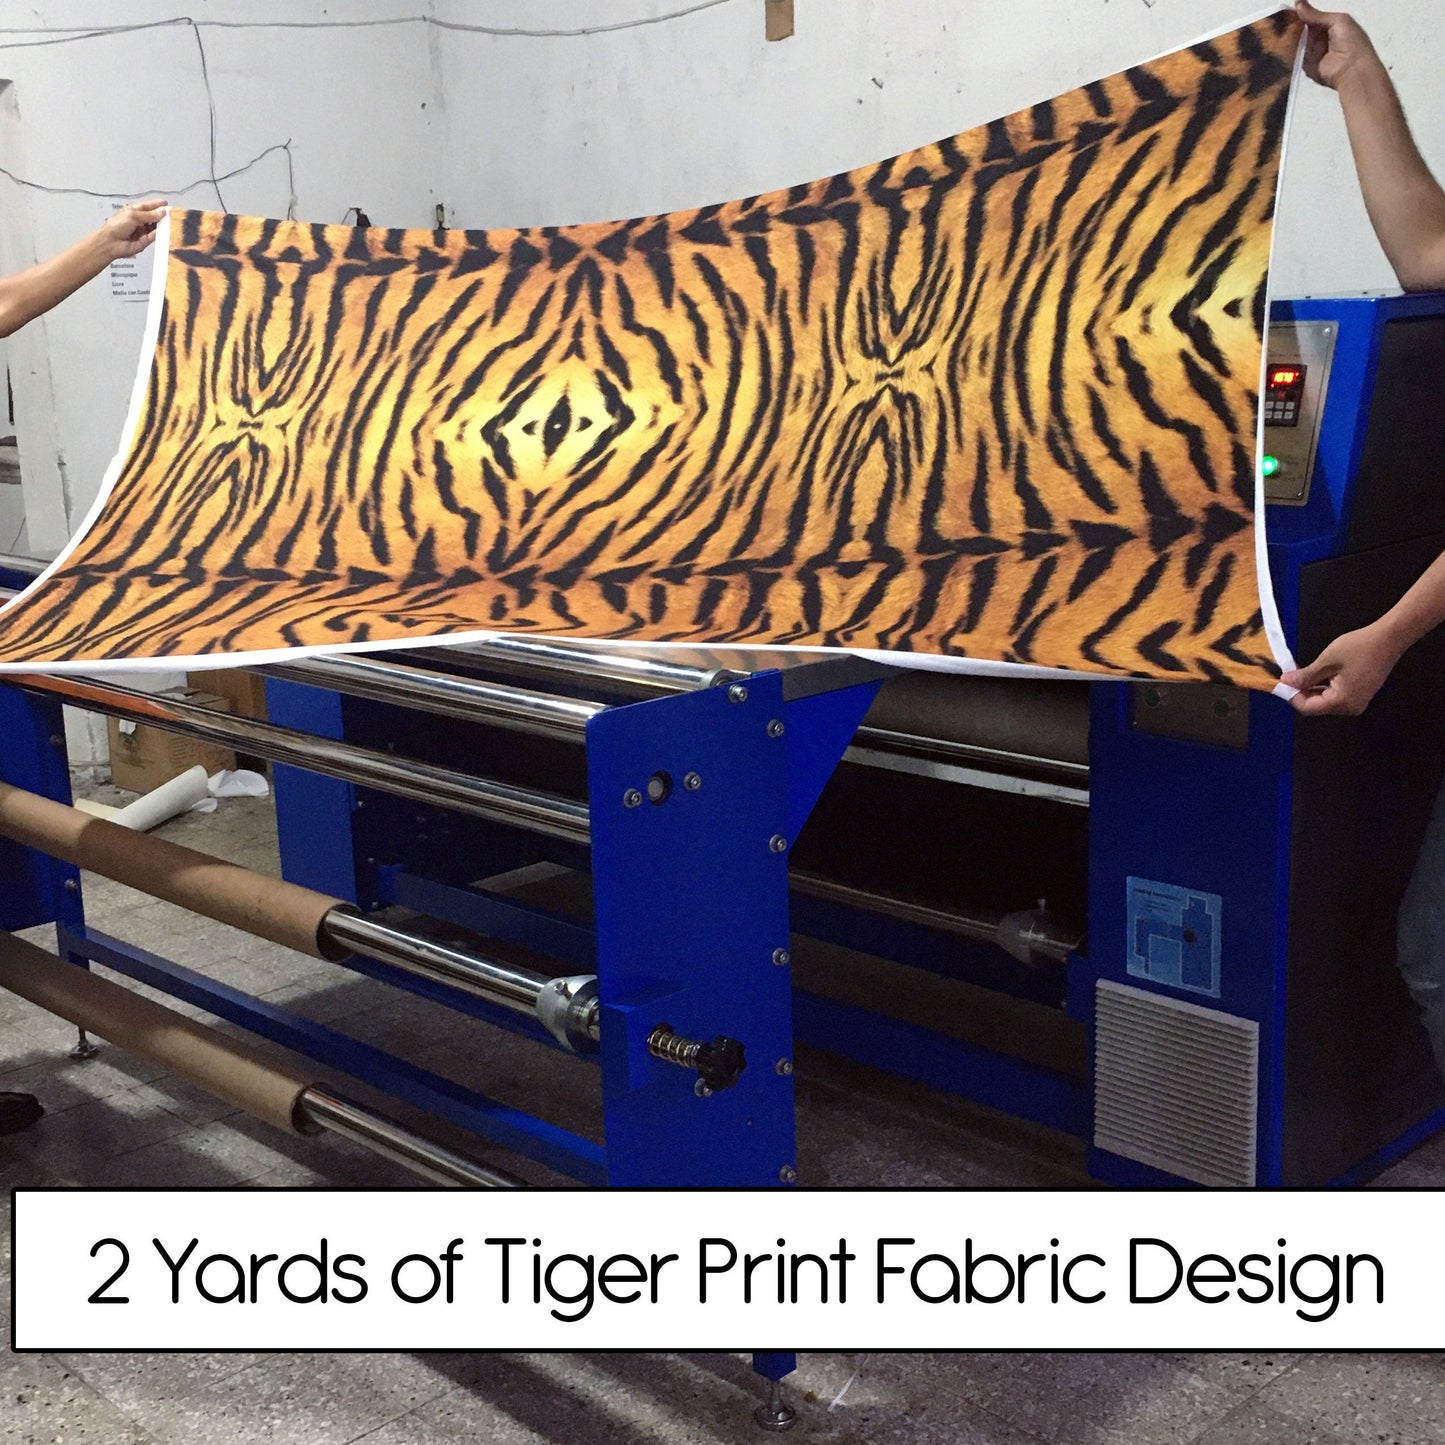 Zebra Stripe Print Fabric, Animal graphic pattern by the Yard on Spandex, Satin, Jersey knit, Bullet knit, Gabardine